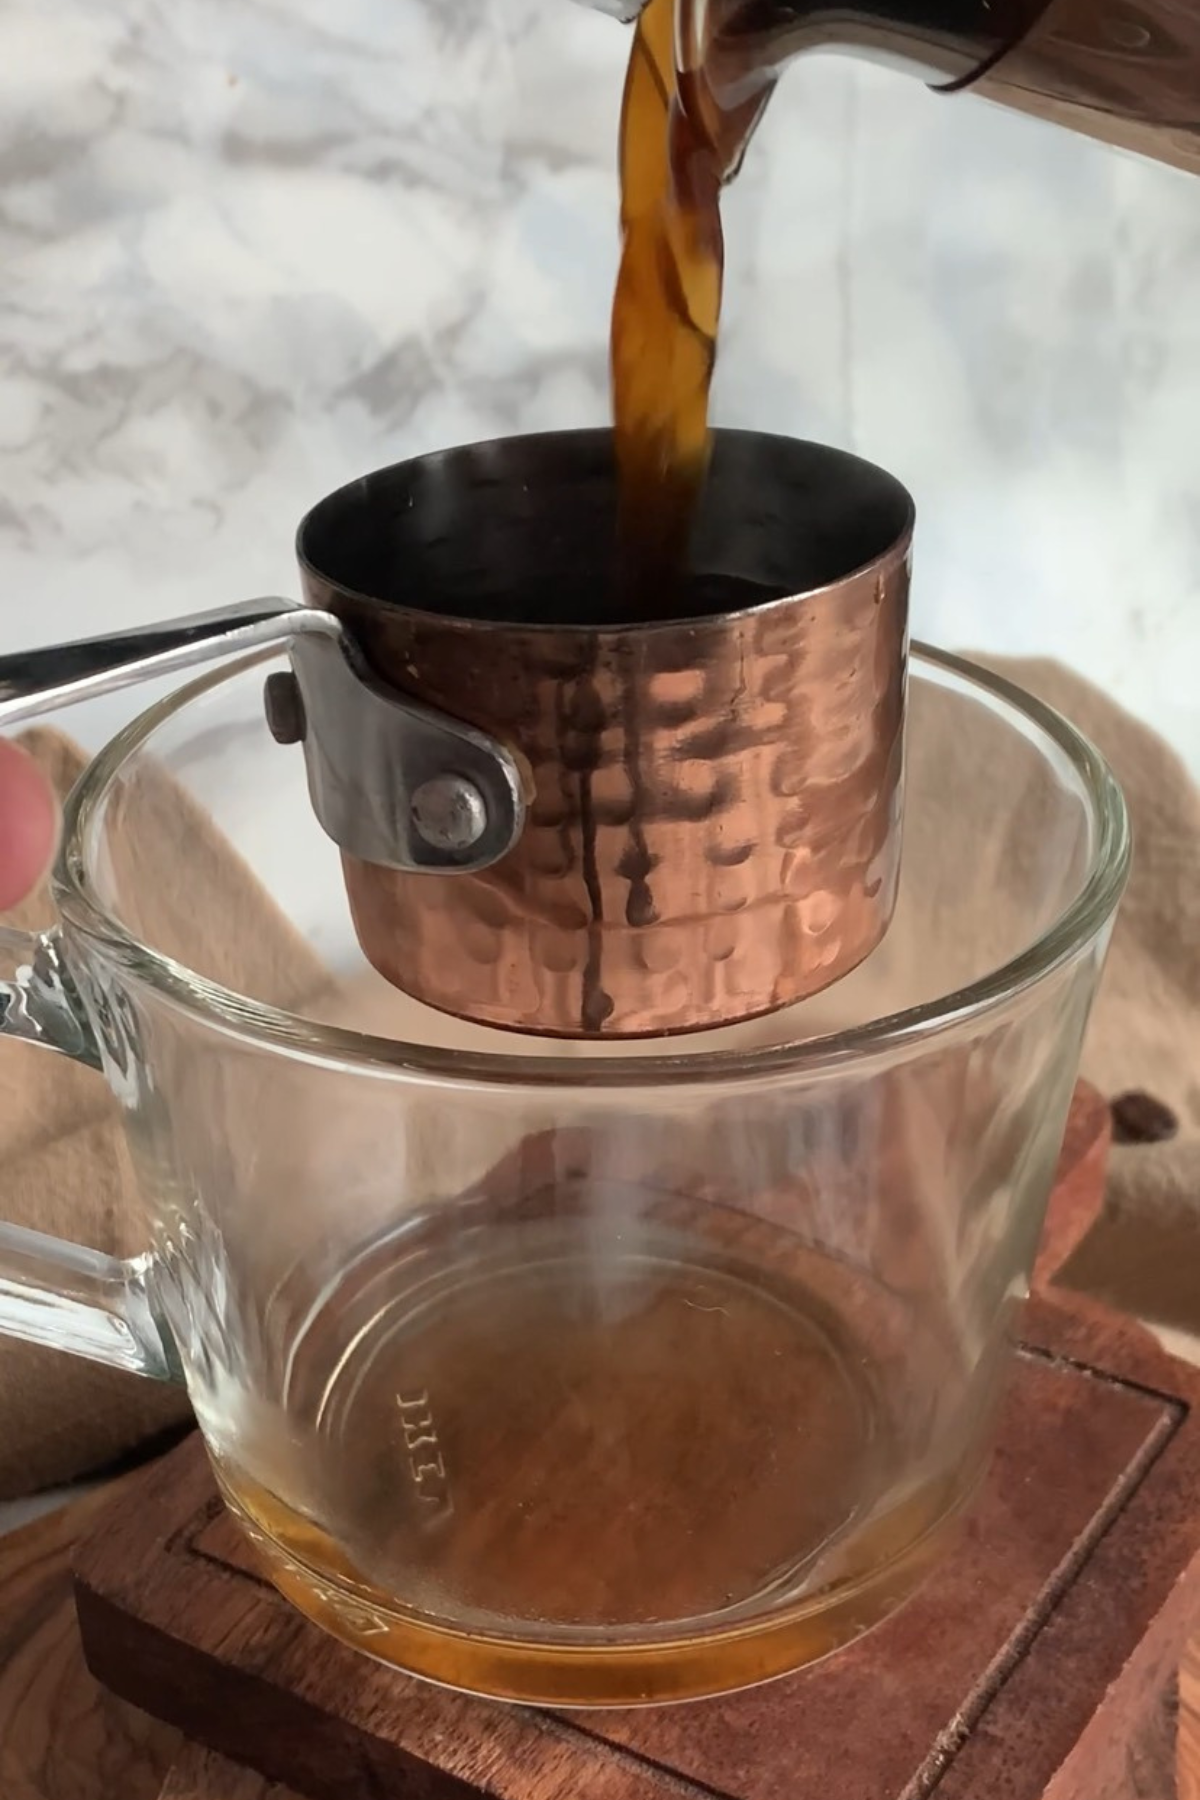 Adding coffee to a mug.